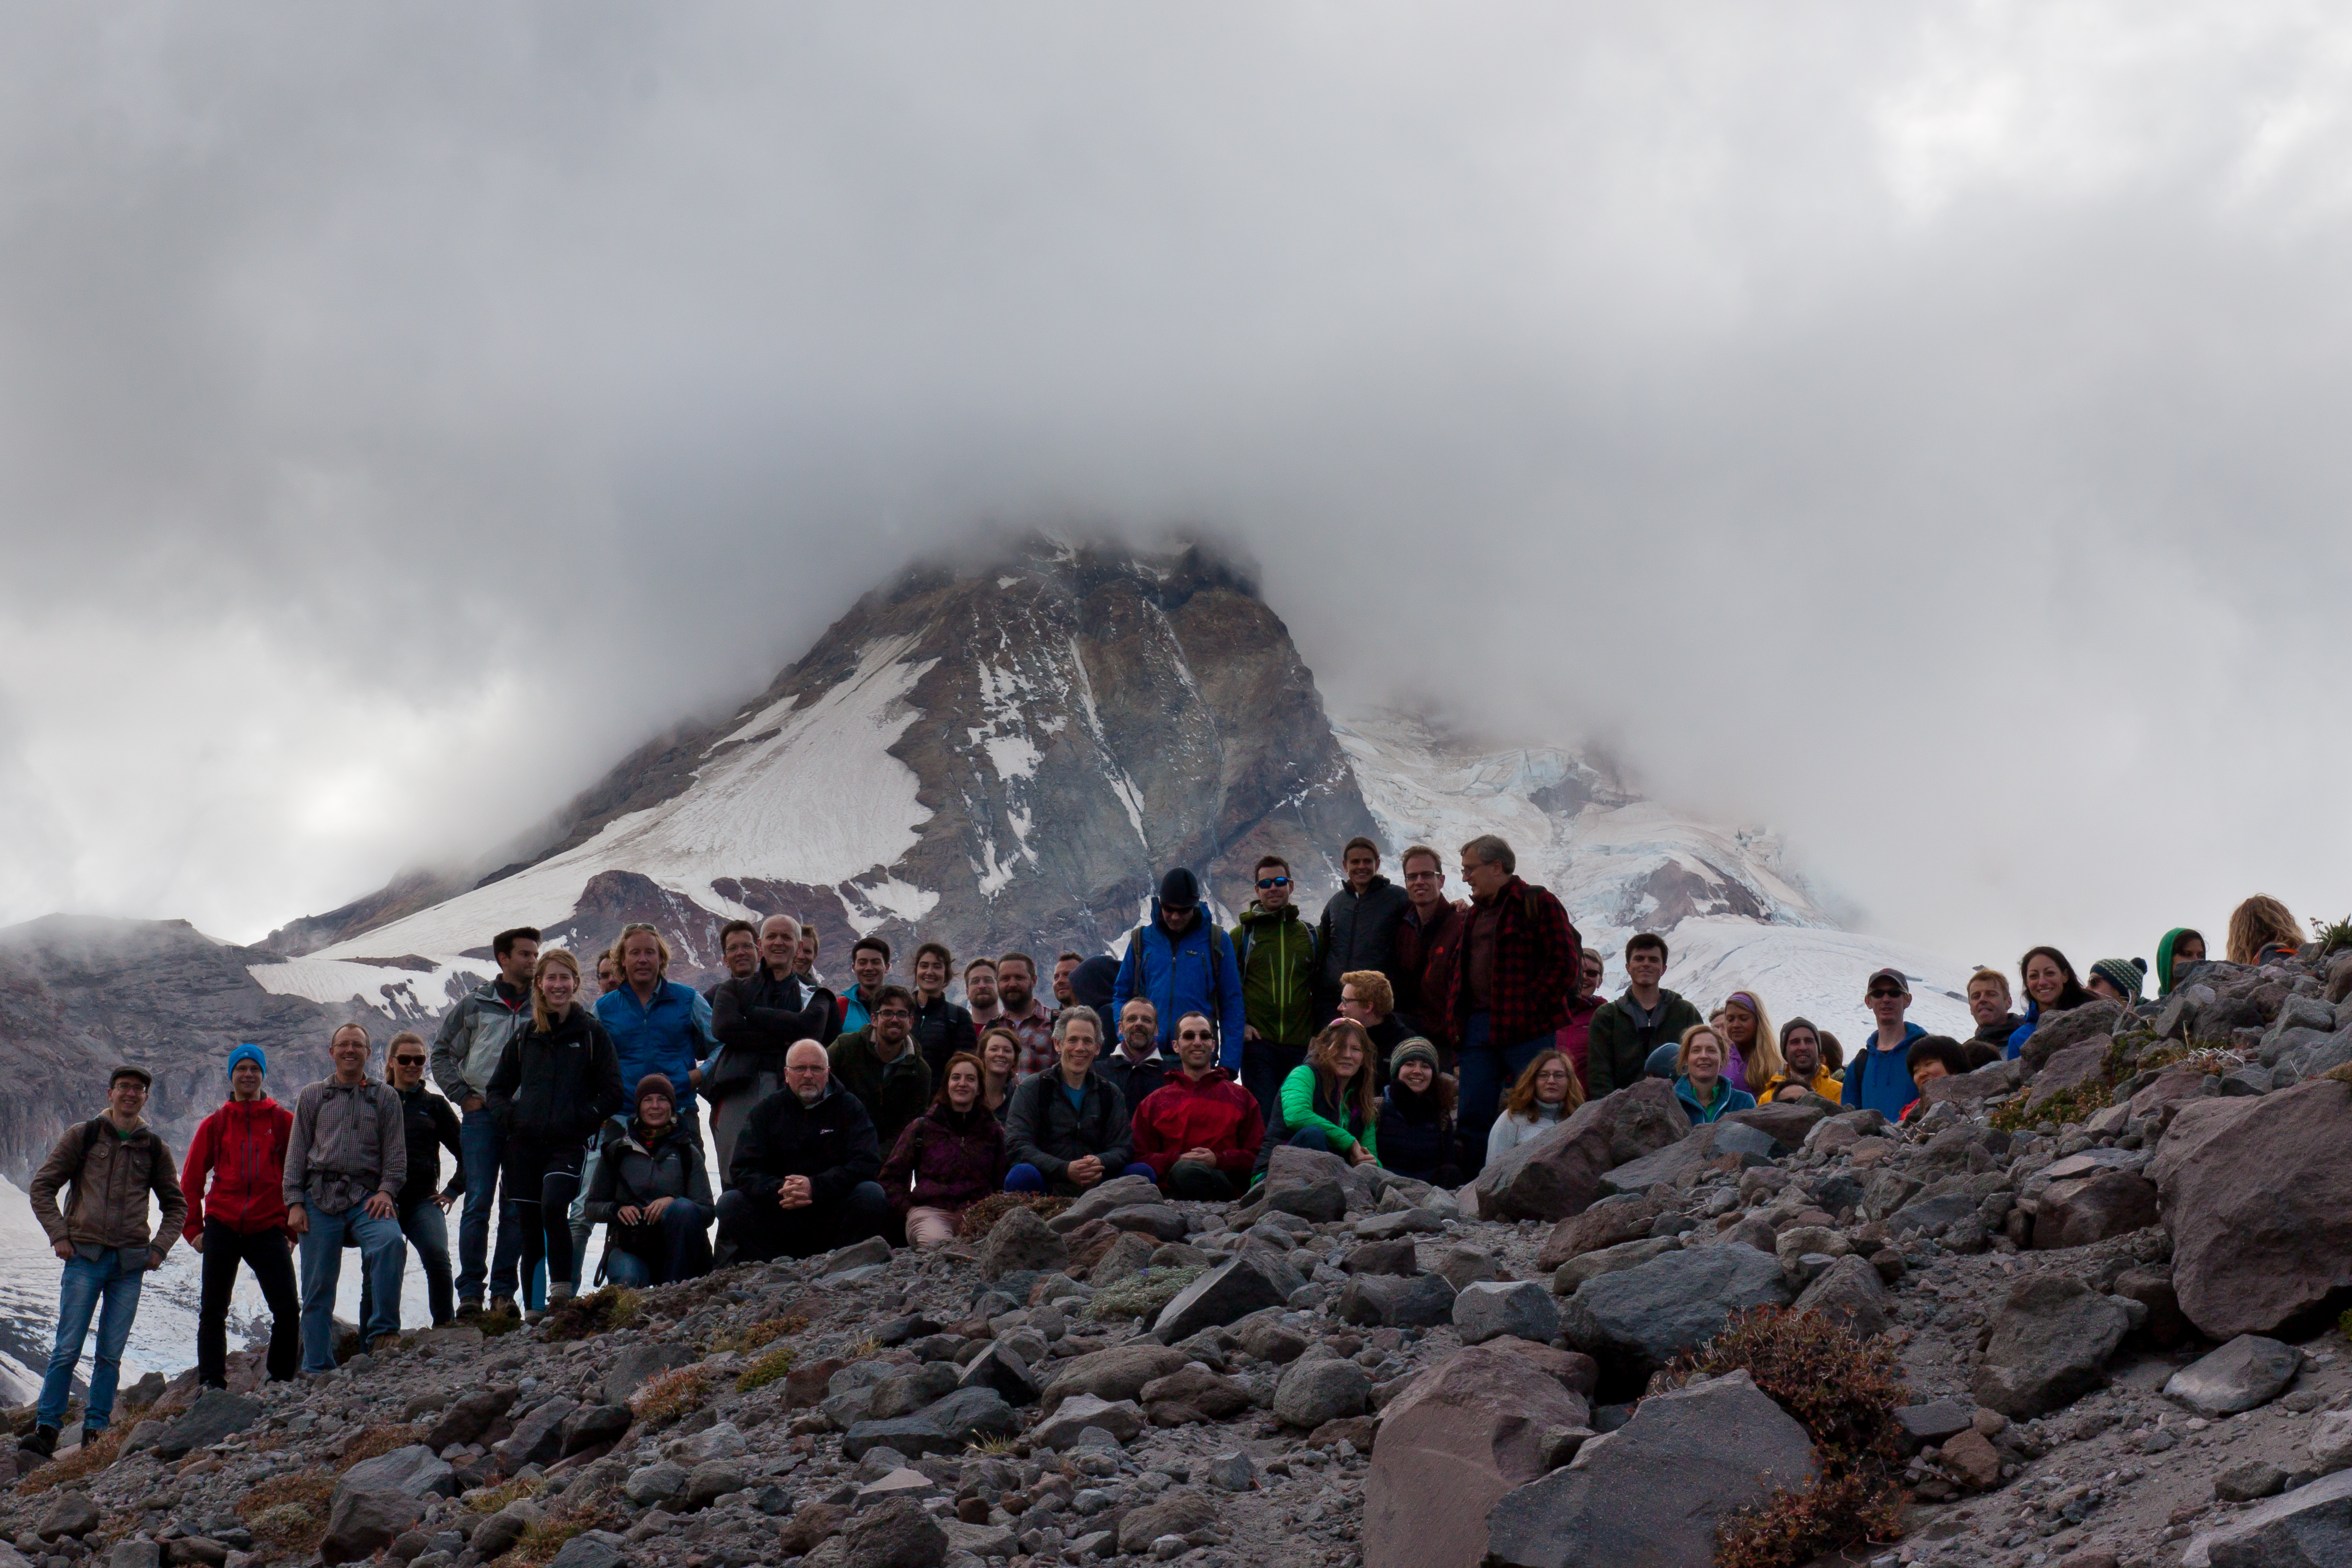 Group members brave the cold on Eliot Glacier little ice age moraine. Credit: Paul Walczak.